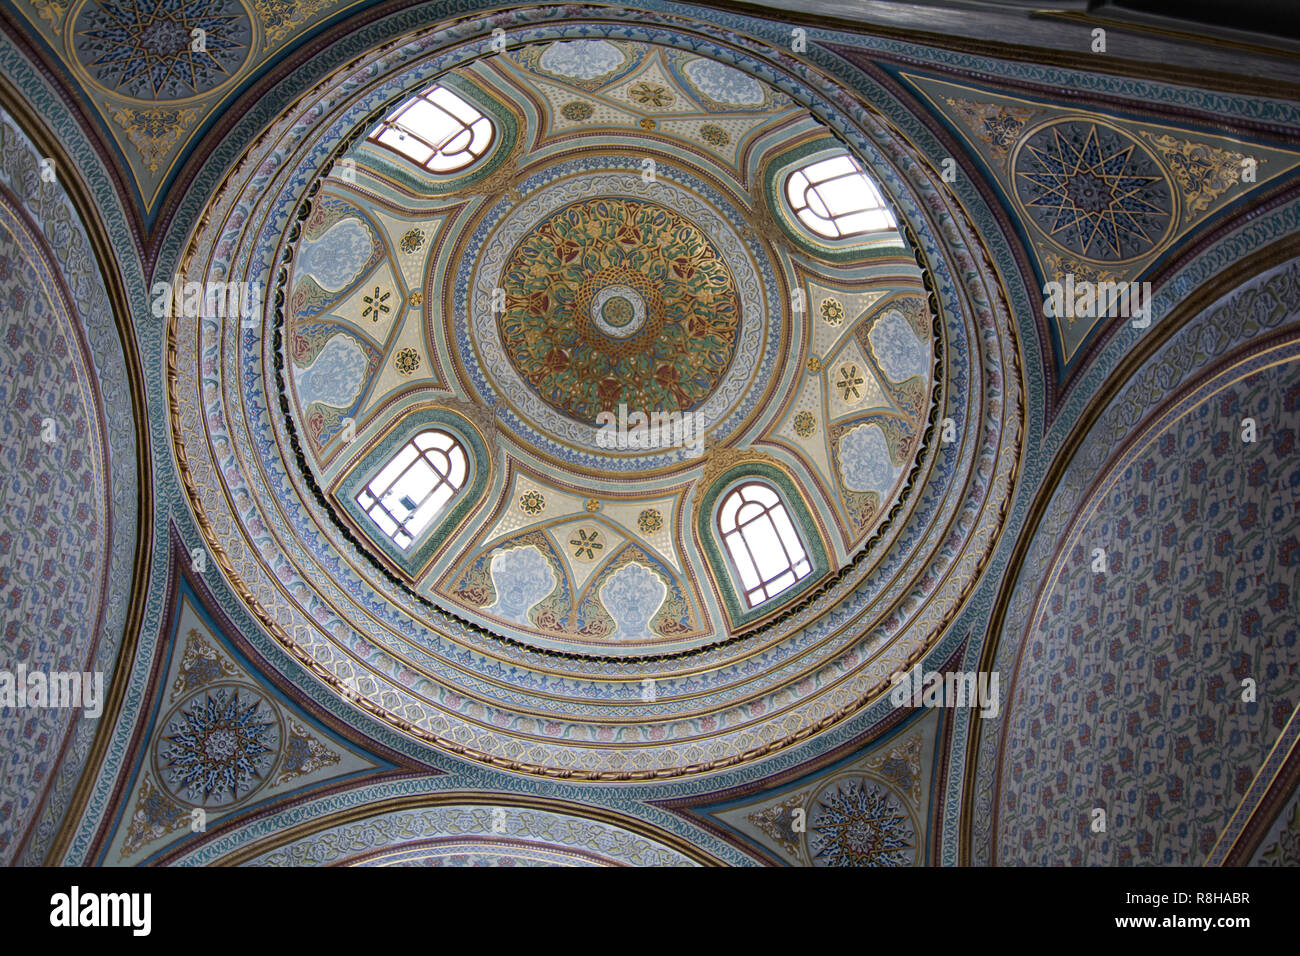 The Hagia Sophia interior architecture in Istanbul Turkey. Stock Photo